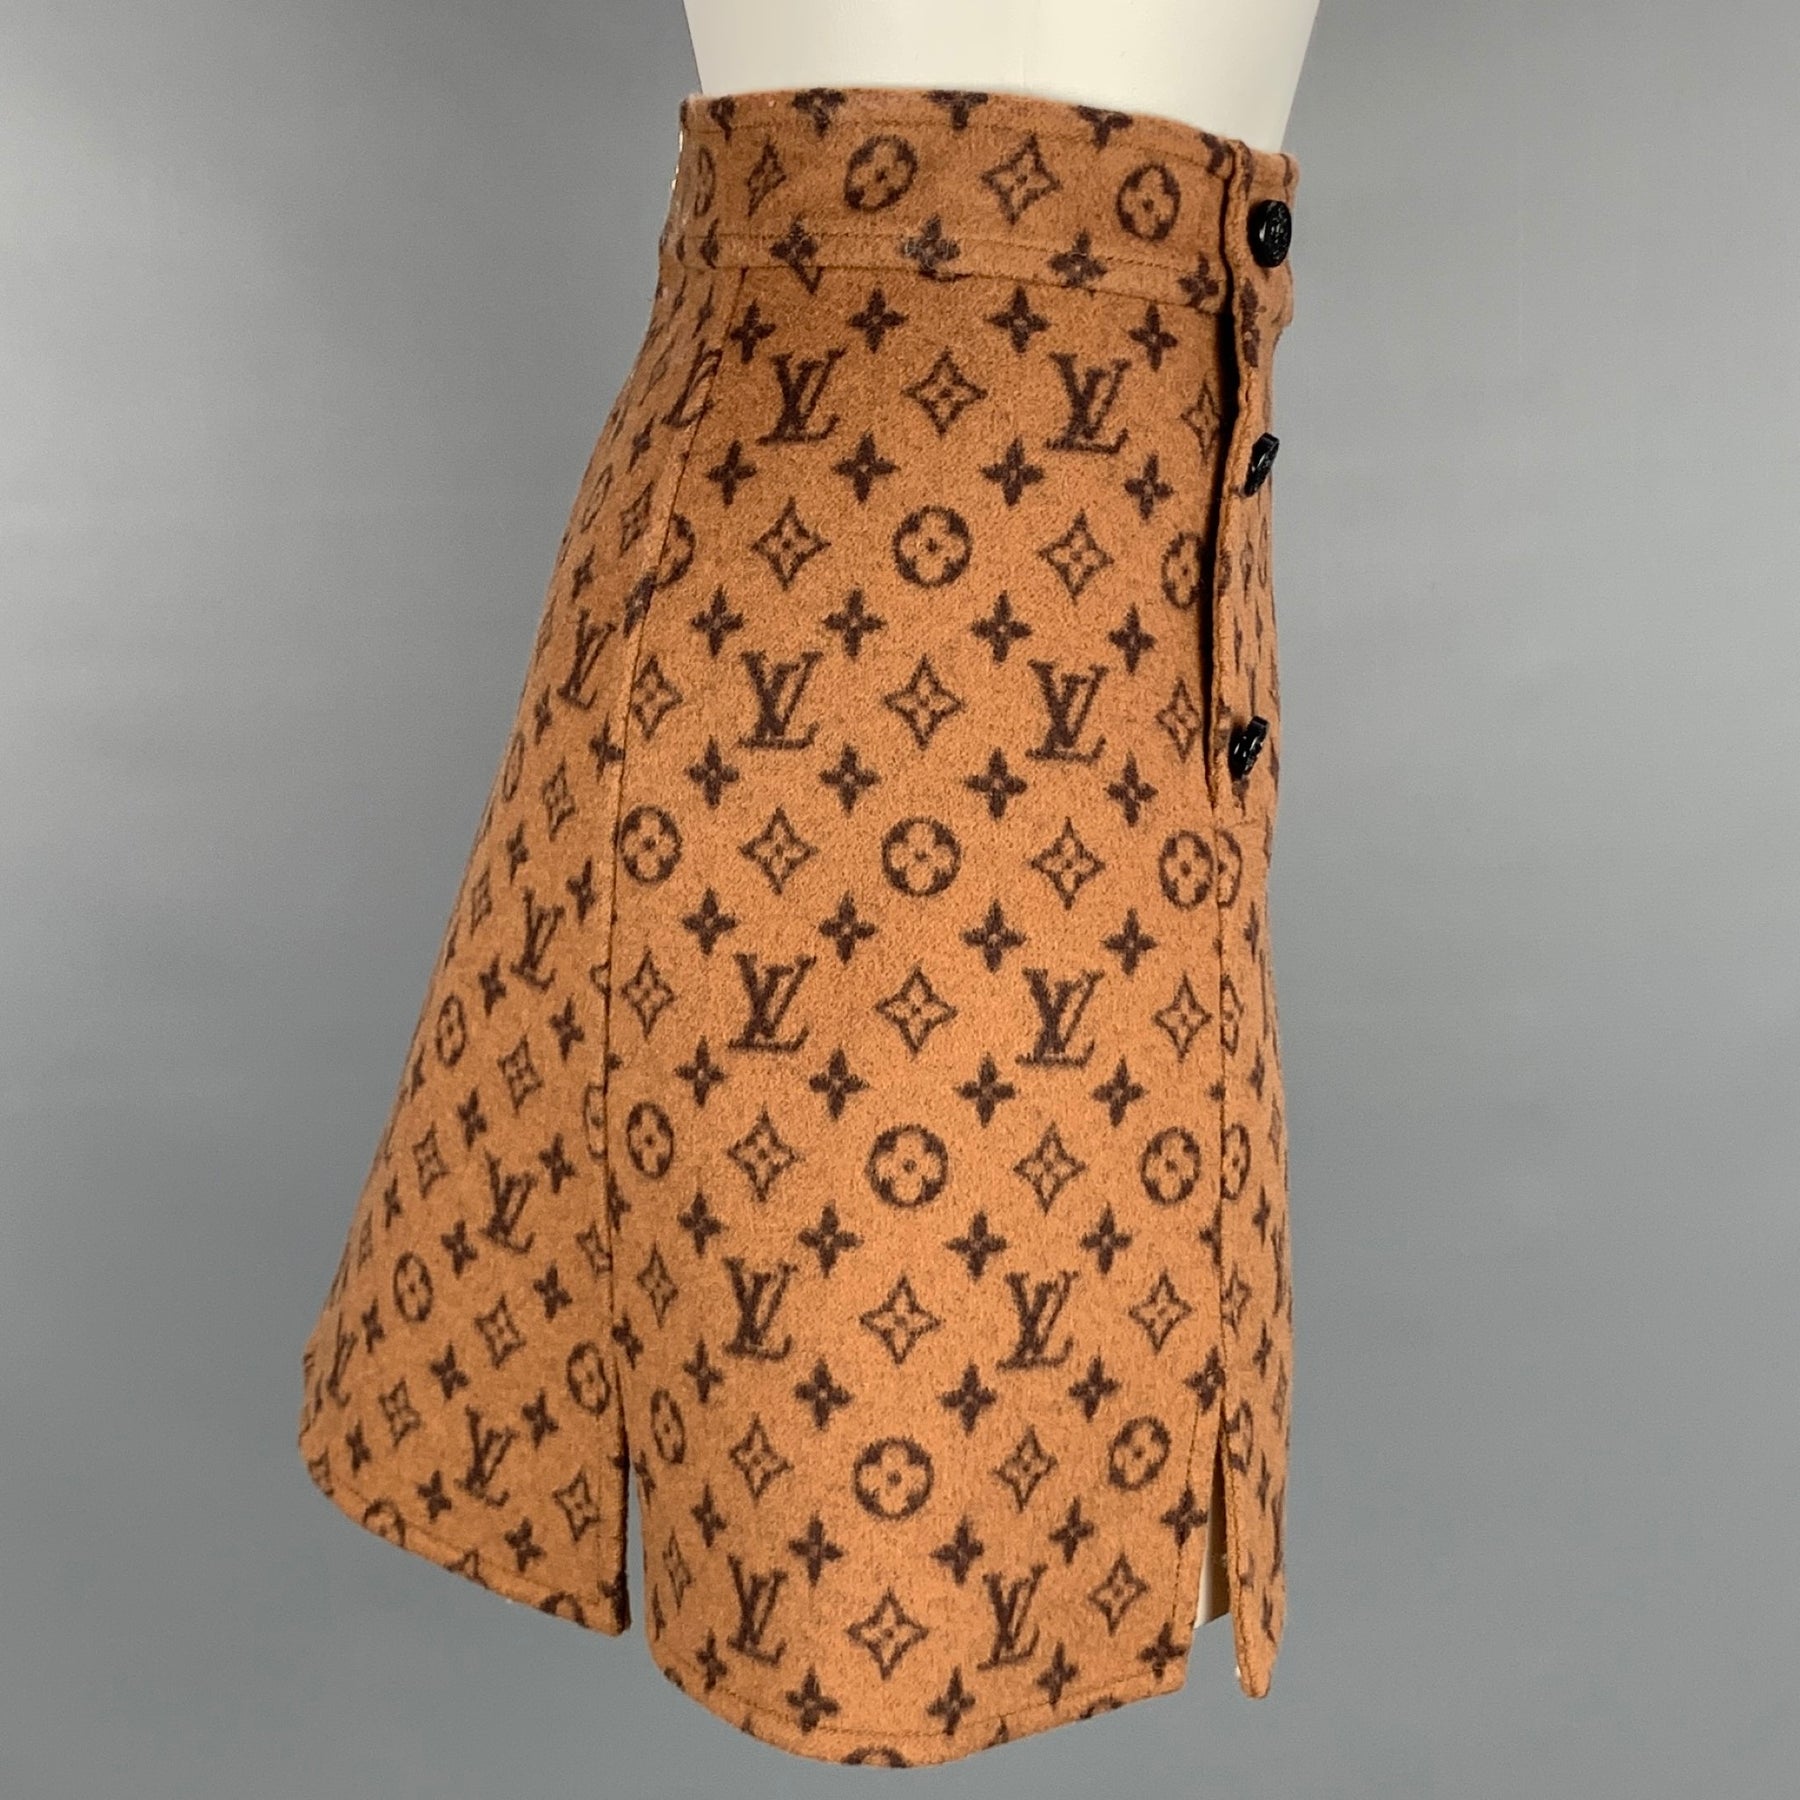 Louis Vuitton Vintage Monogram Mini Skirt ECRU. Size 36